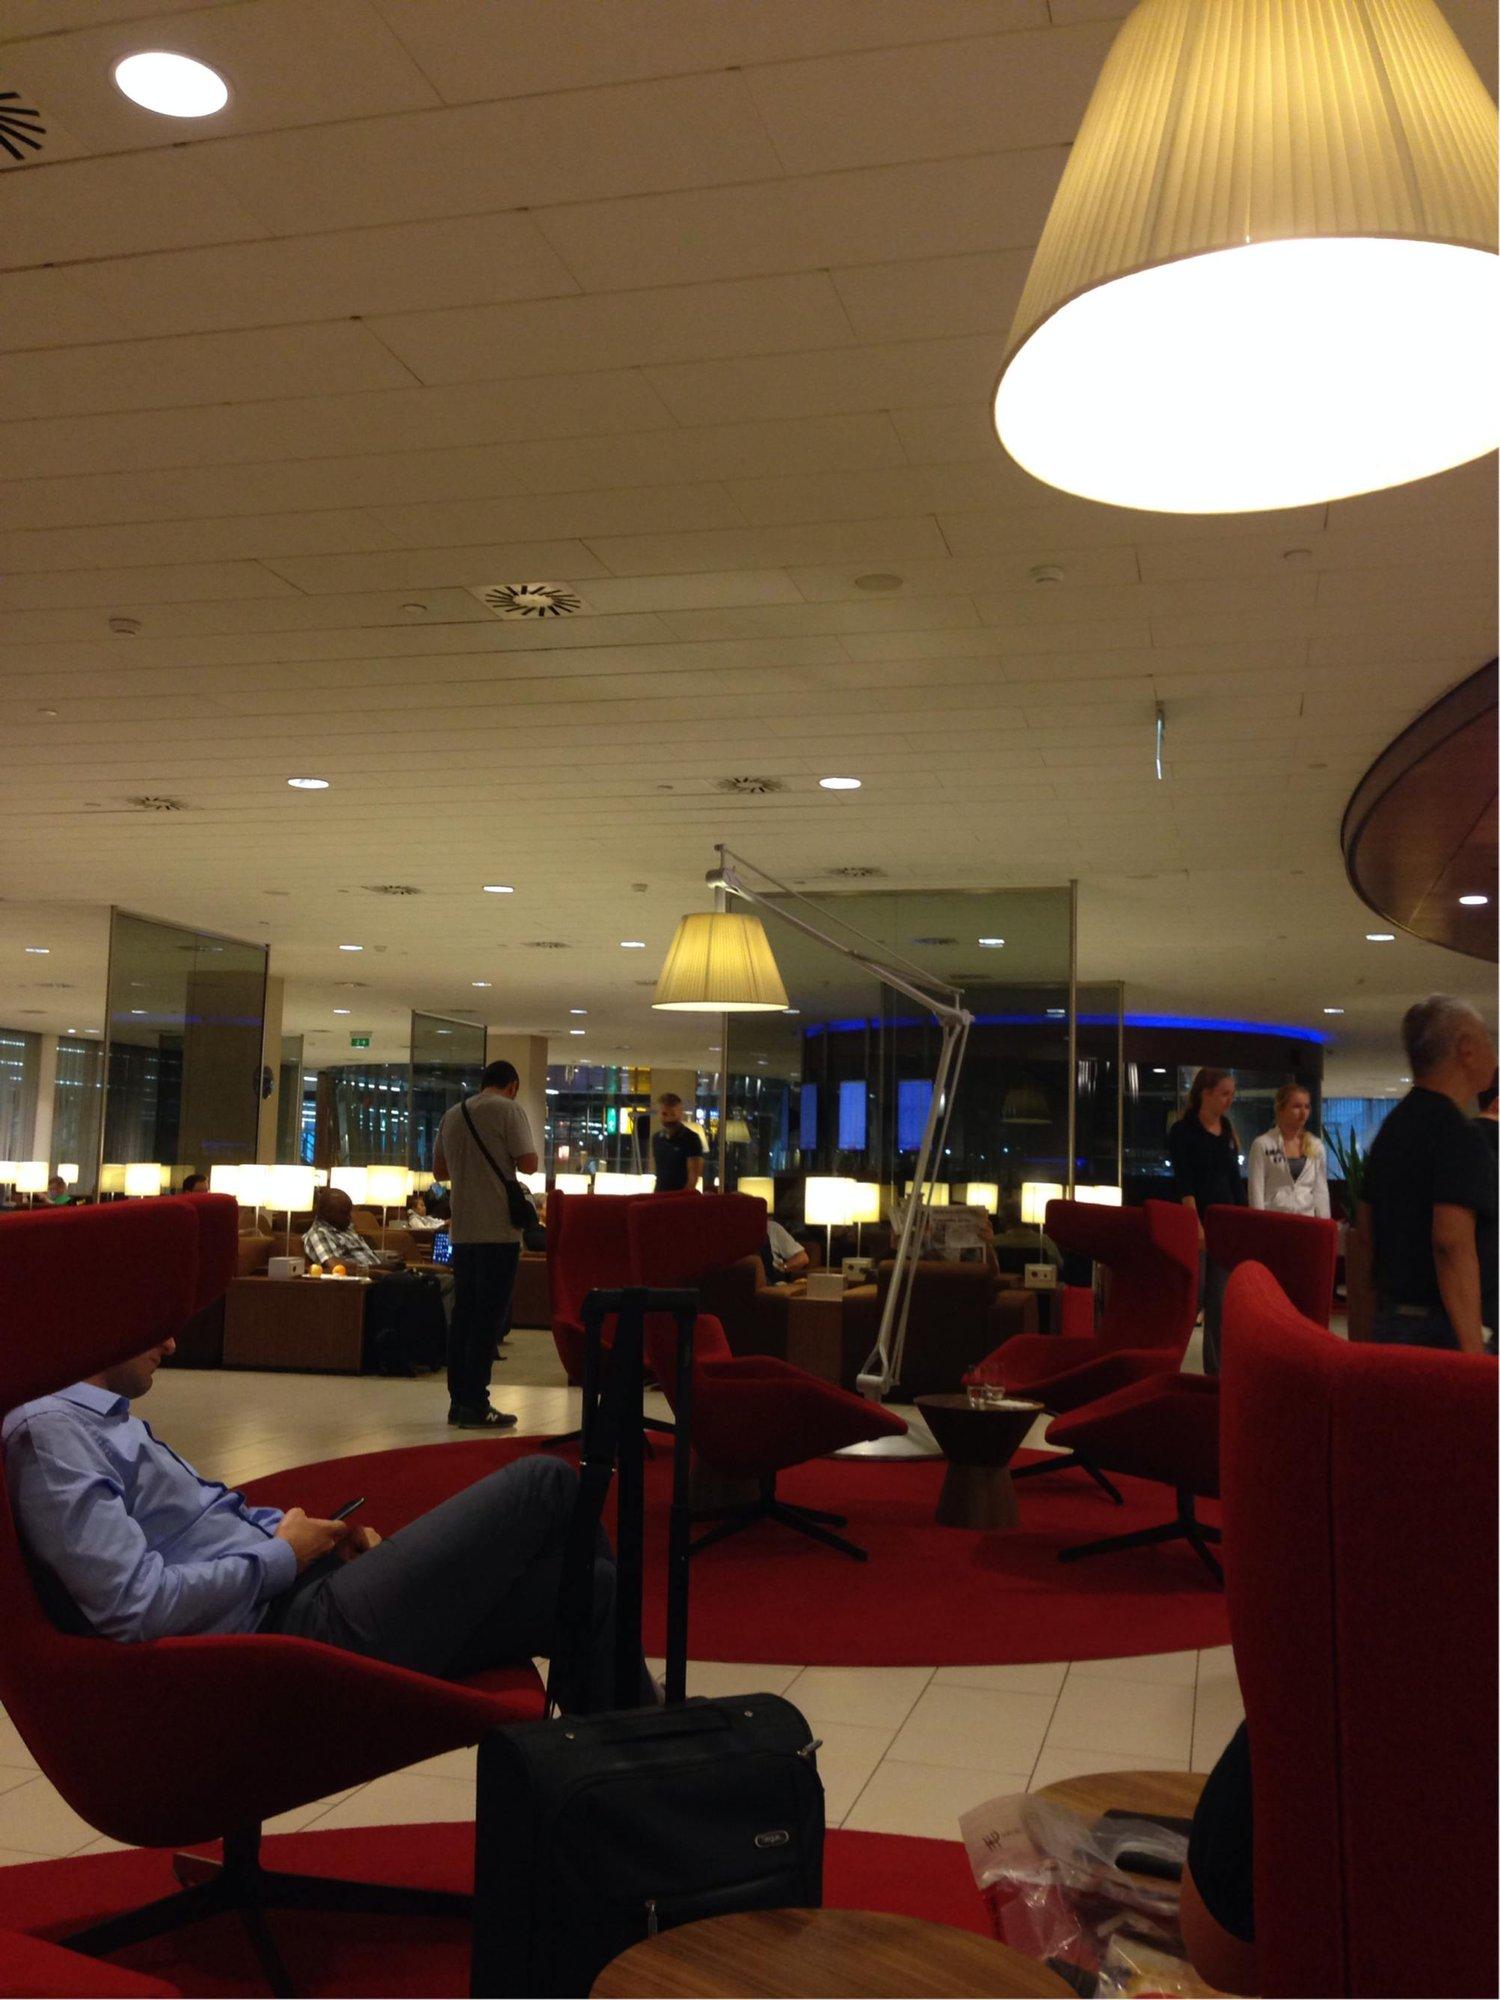 KLM Crown Lounge (25) image 2 of 15